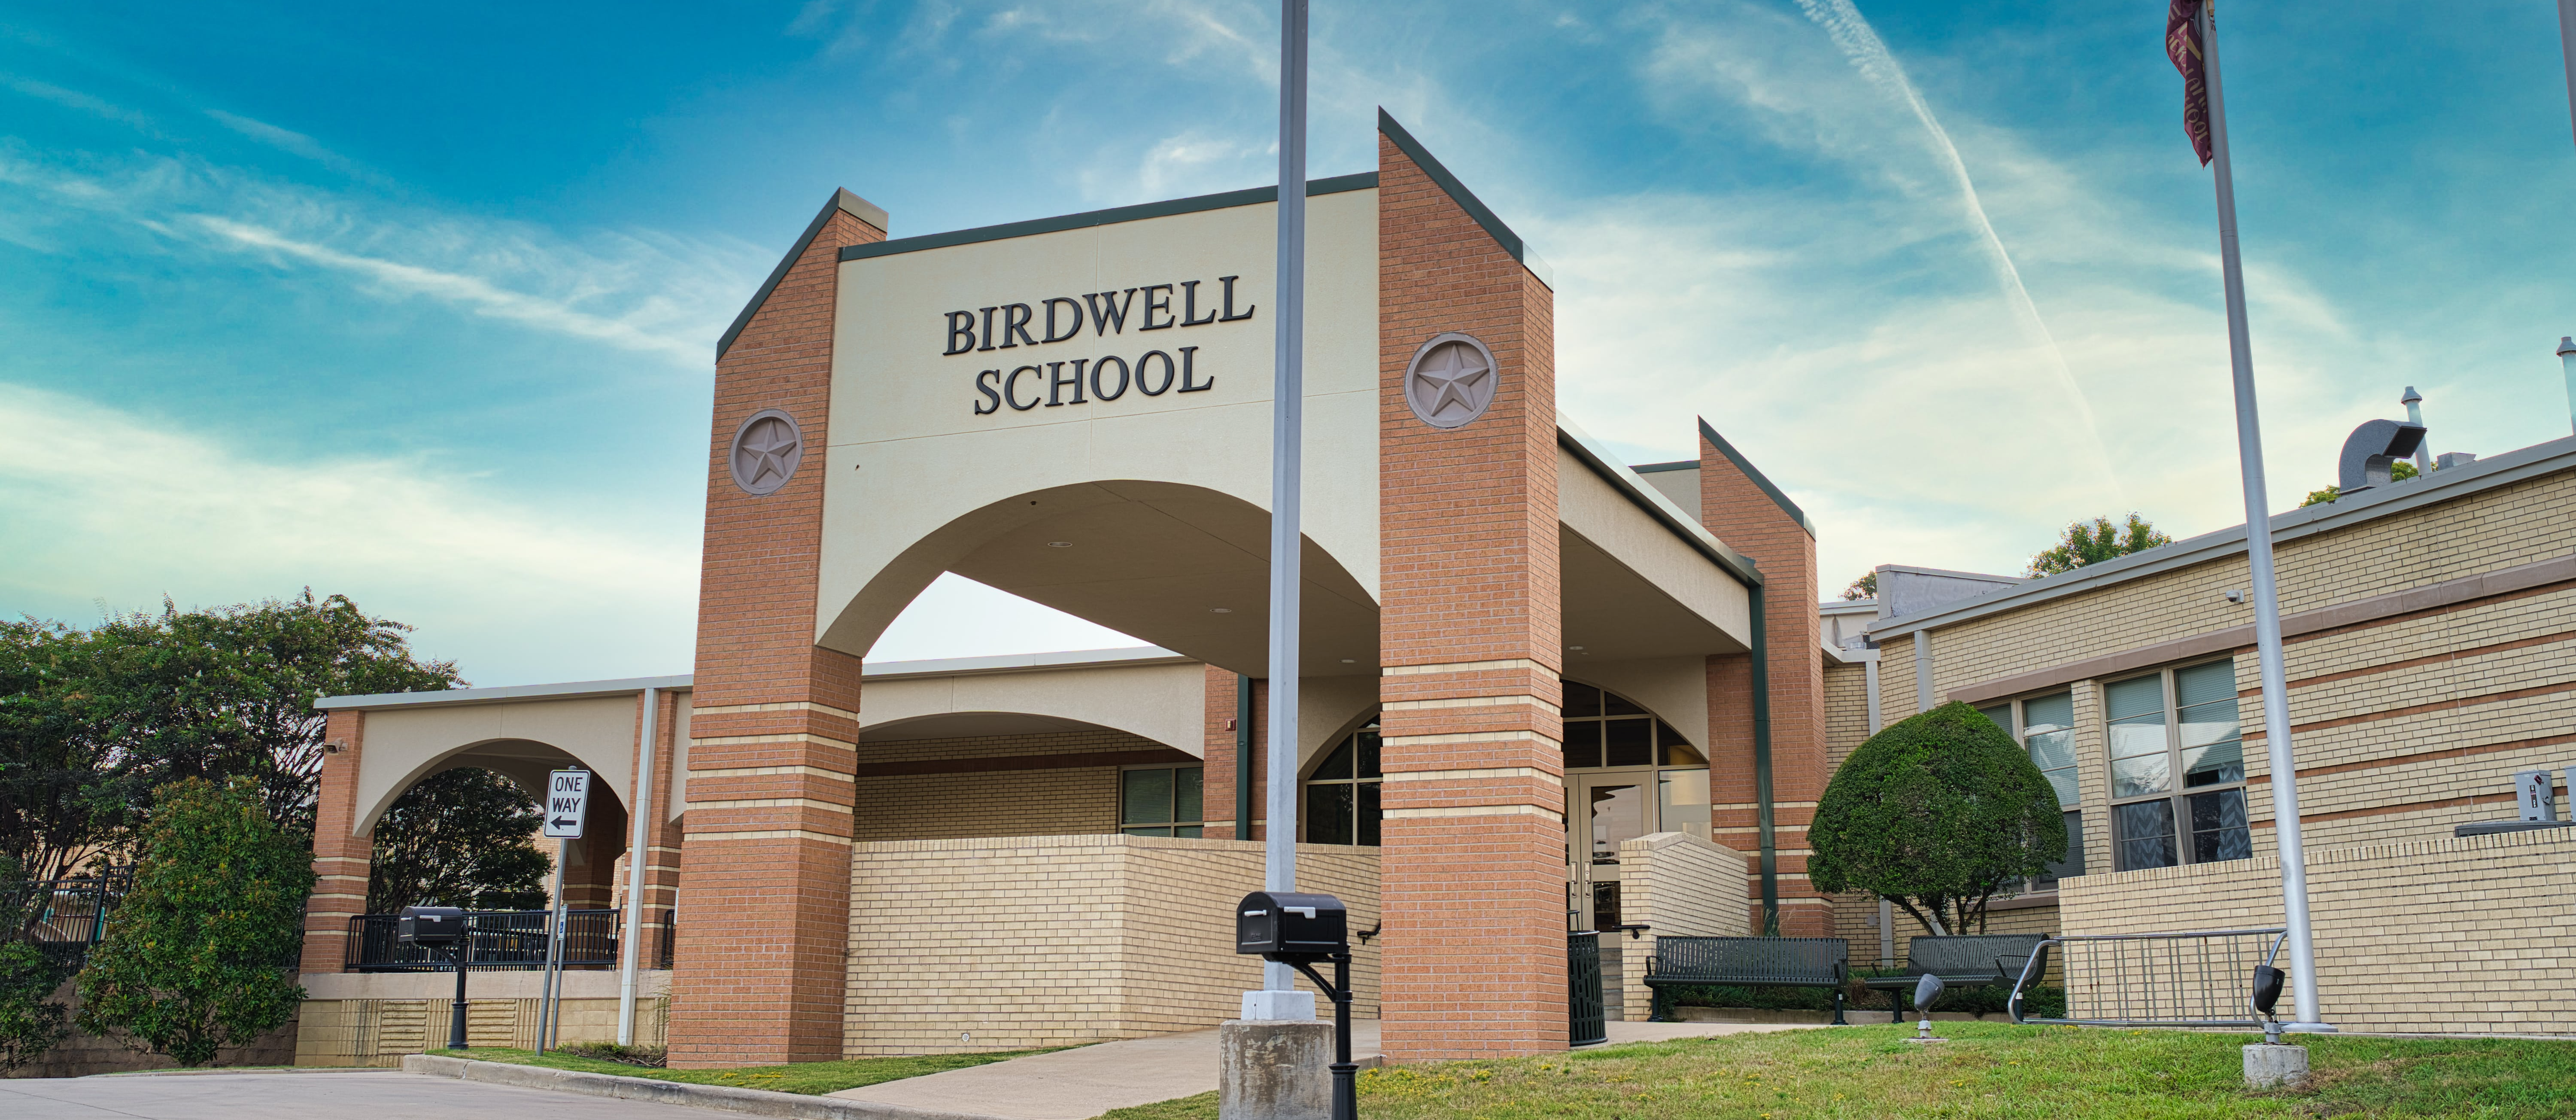 birdwell school front